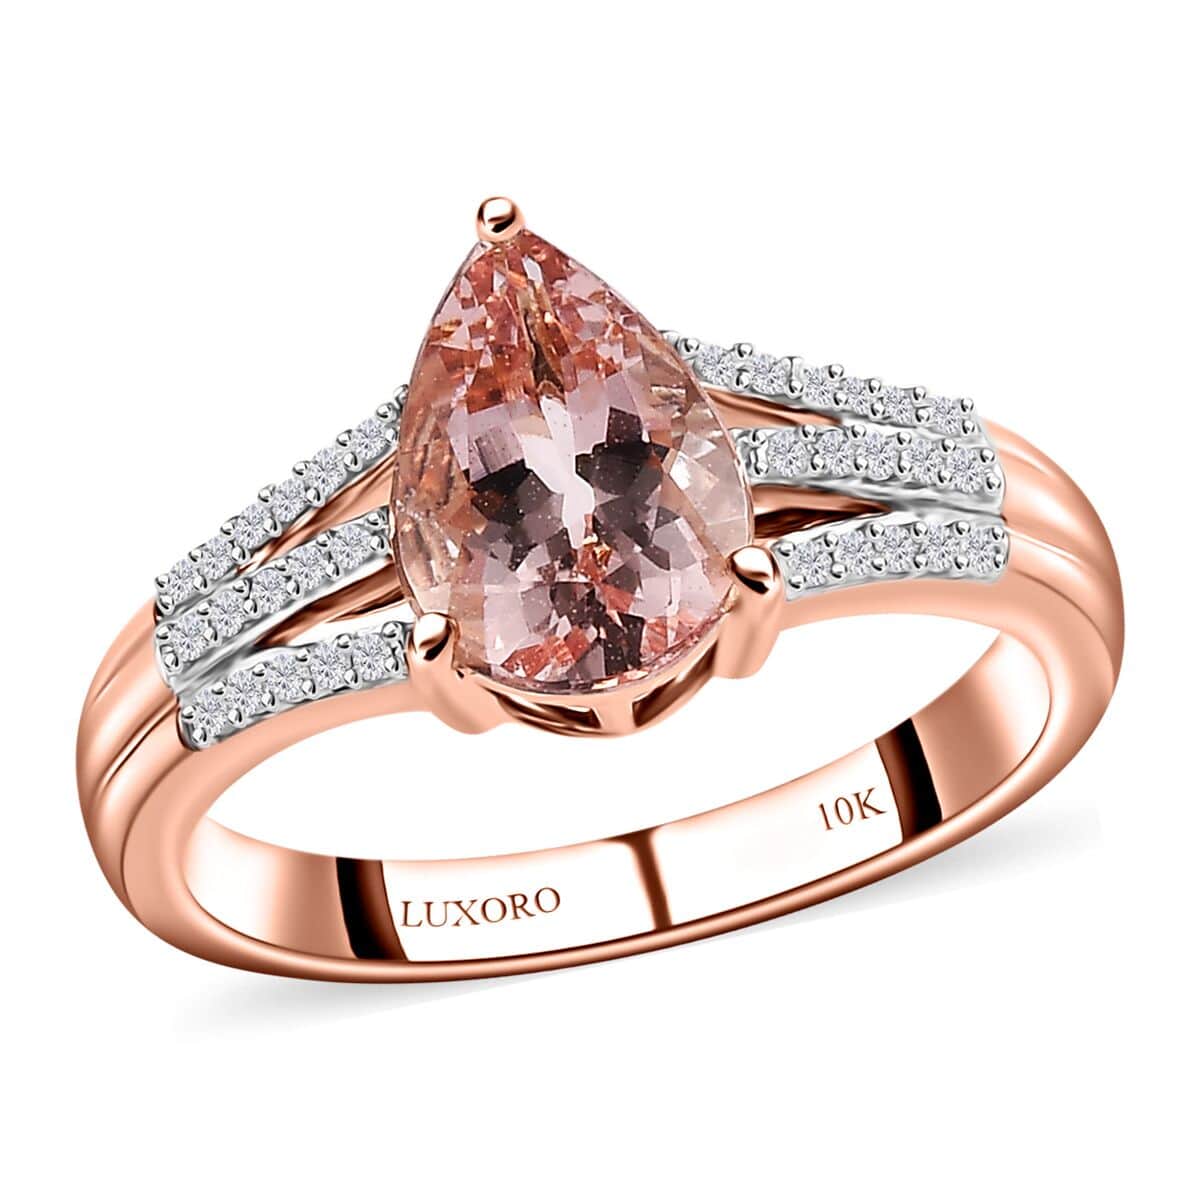 Luxoro 10K Rose Gold Premium Pink Morganite and Diamond Ring (Size 9.0) 1.75 ctw image number 0